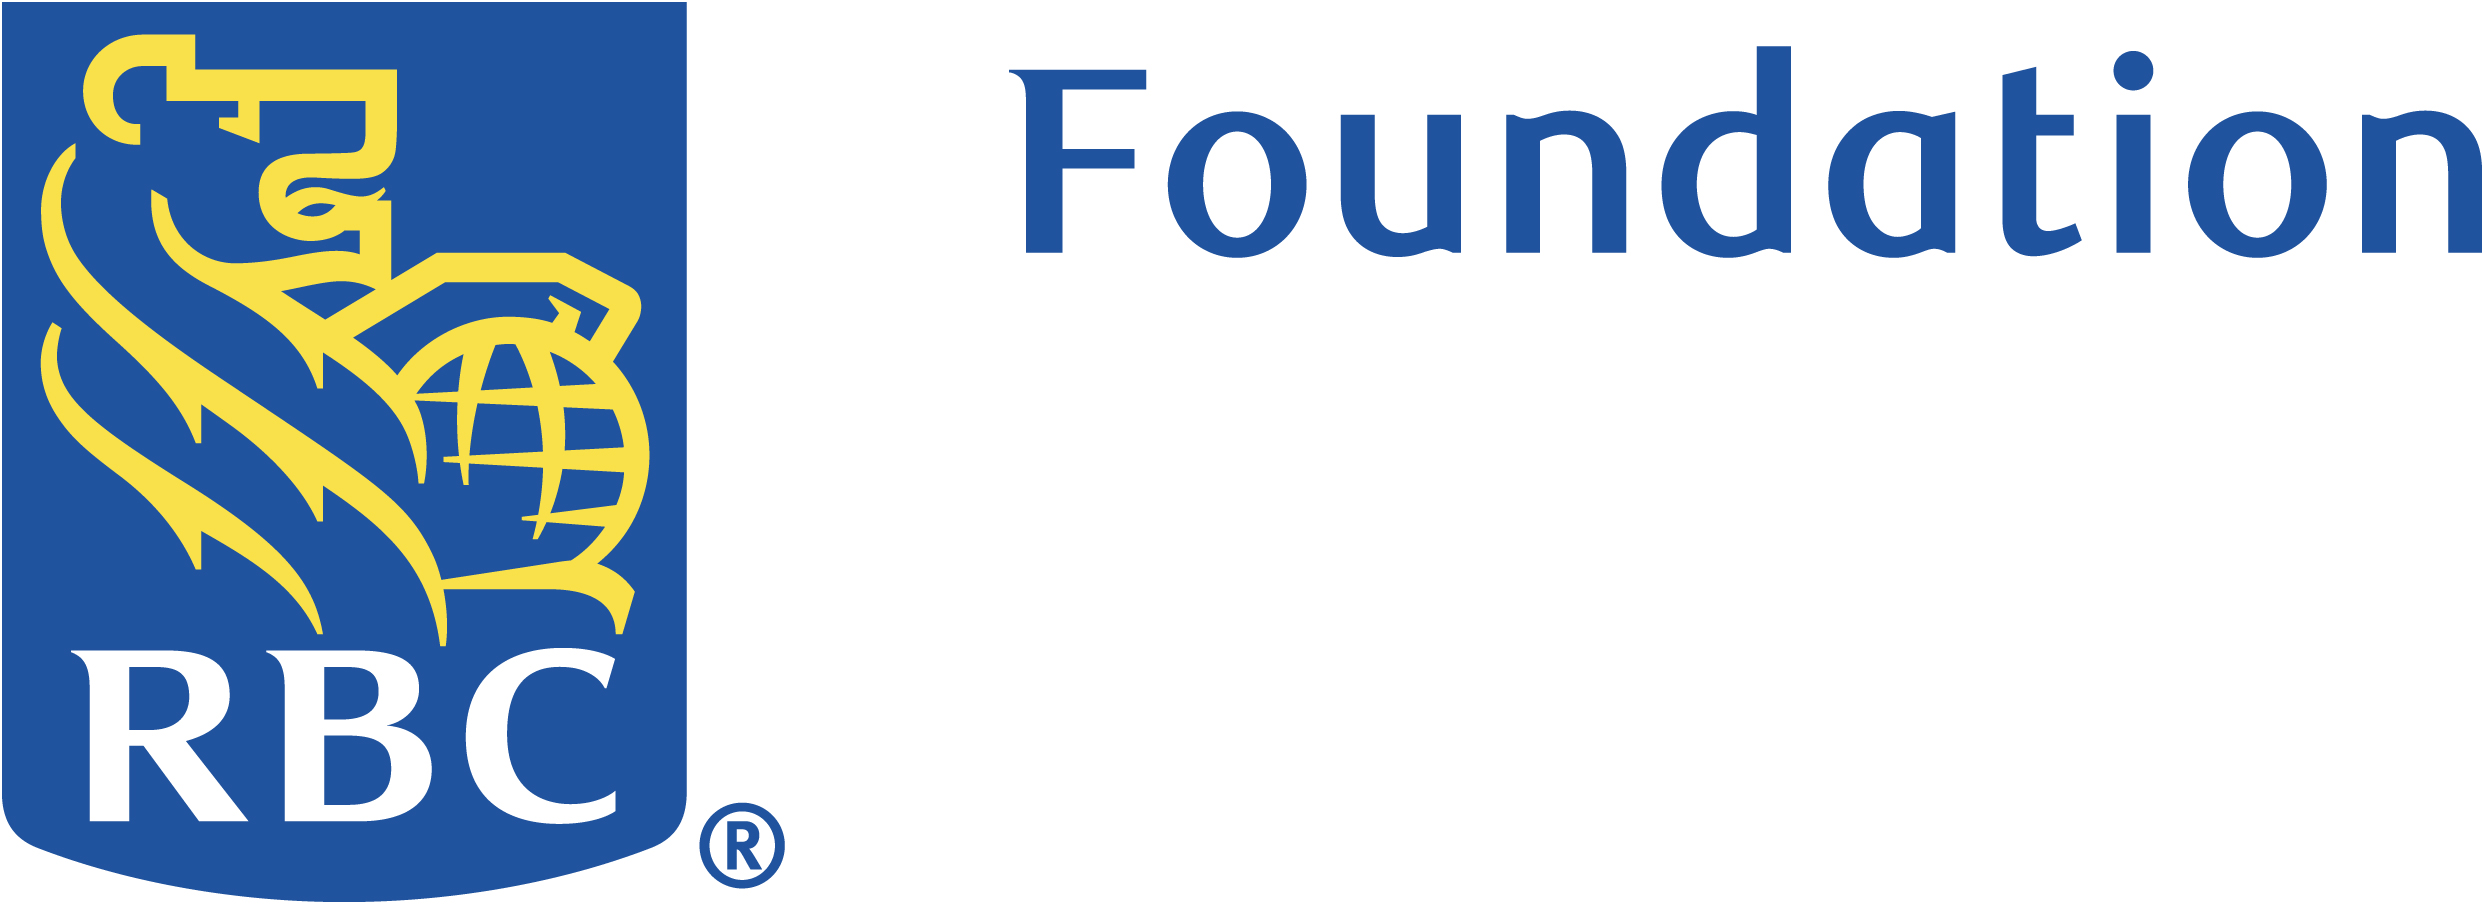 Royal Bank of Canada Foundation Logo